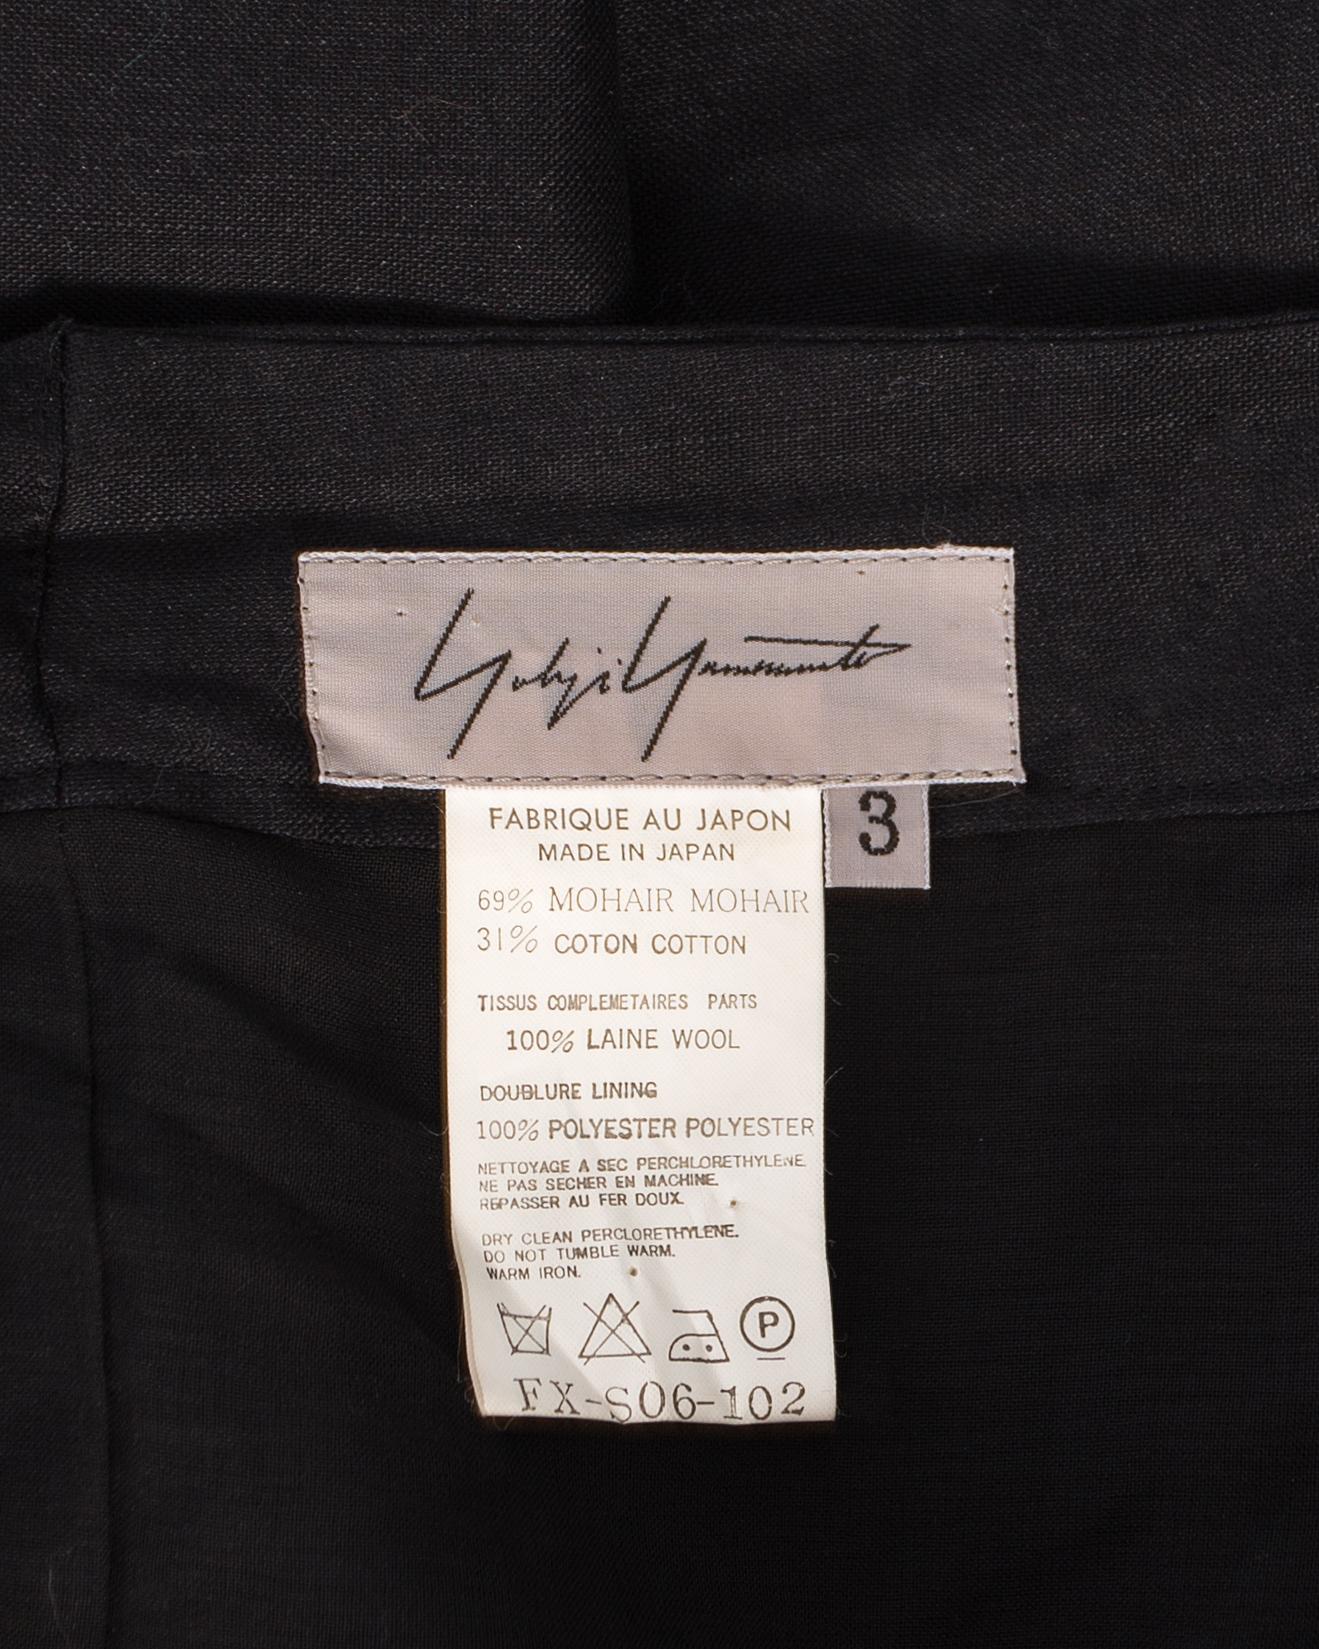 Yohji Yamamoto black convertible dress / skirt / bag combination, S / S 2001 1